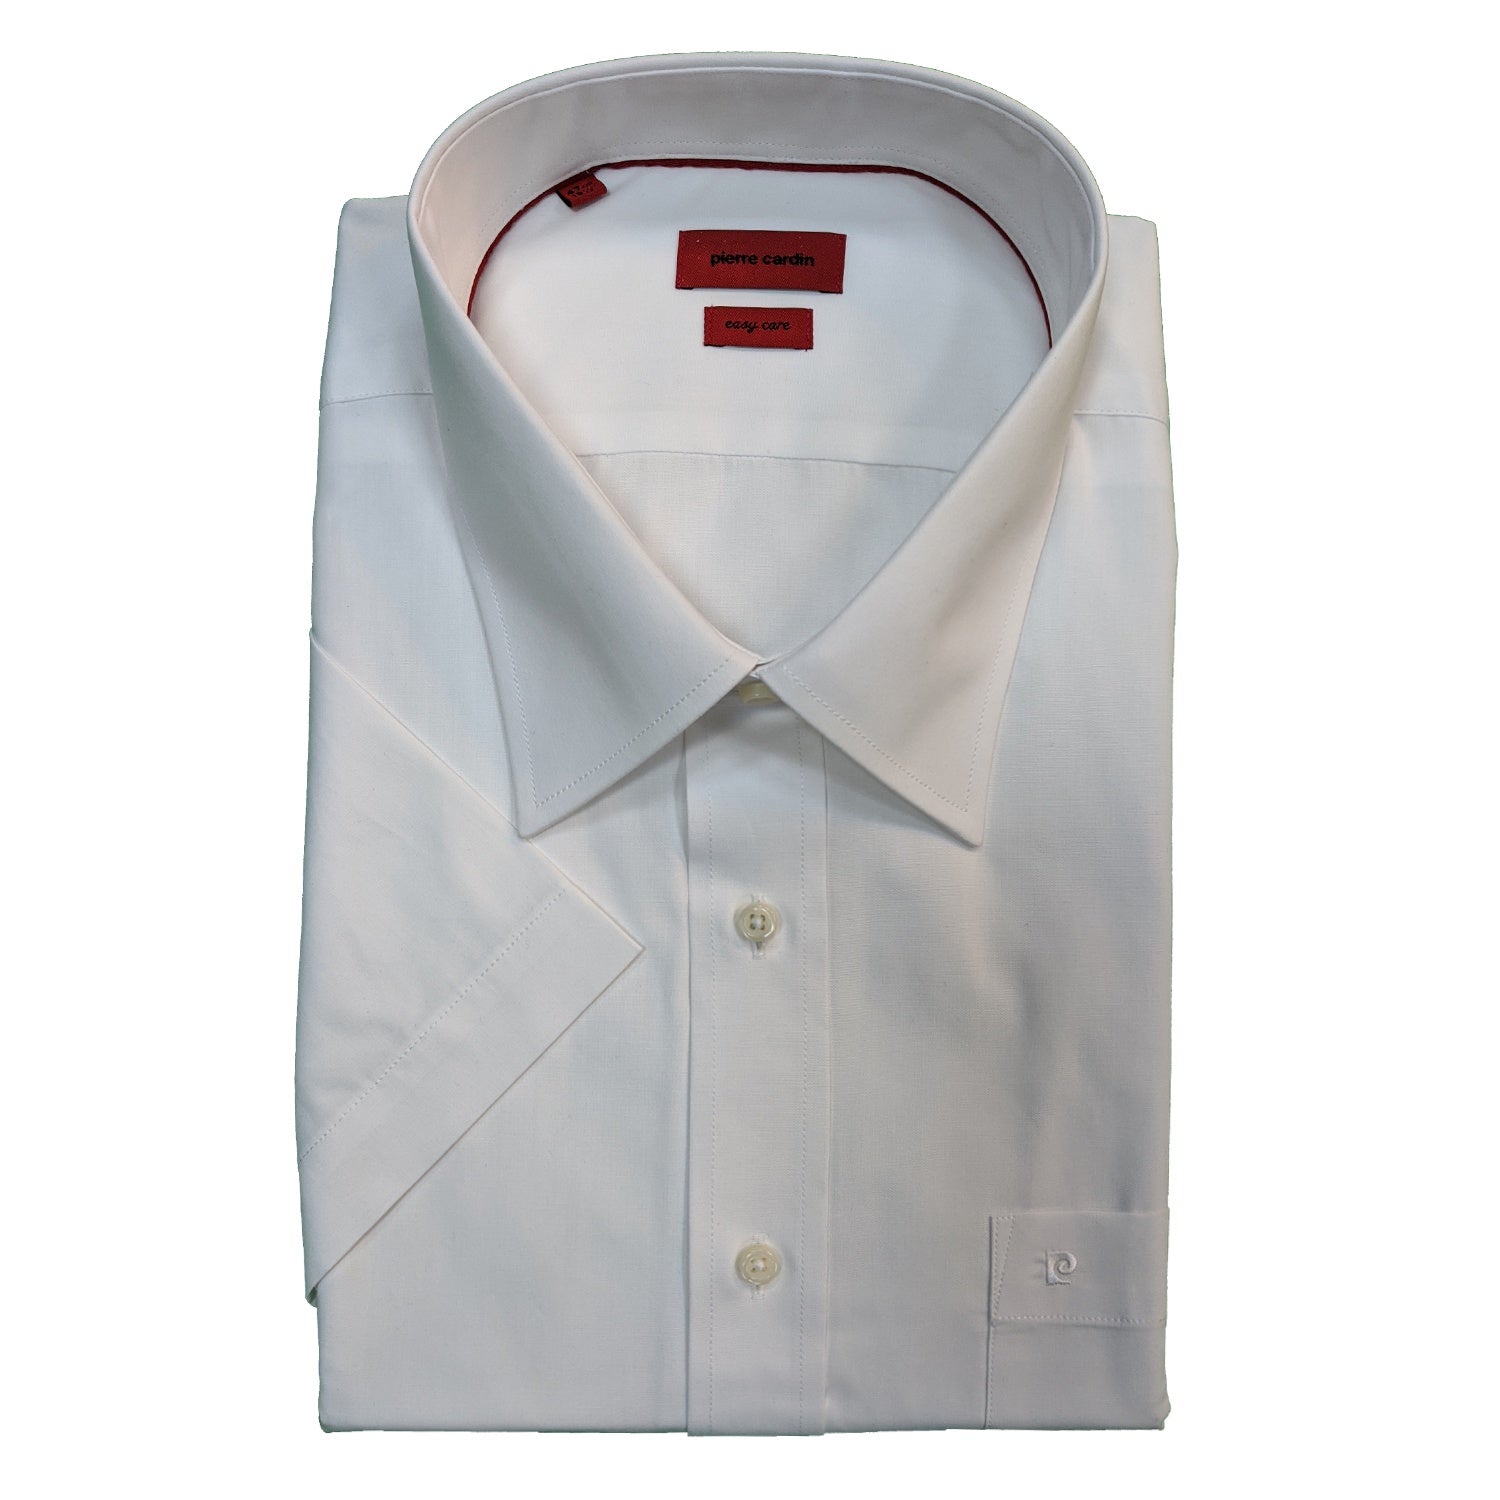 Pierre Cardin S/S Shirt - PC9003 - White 1